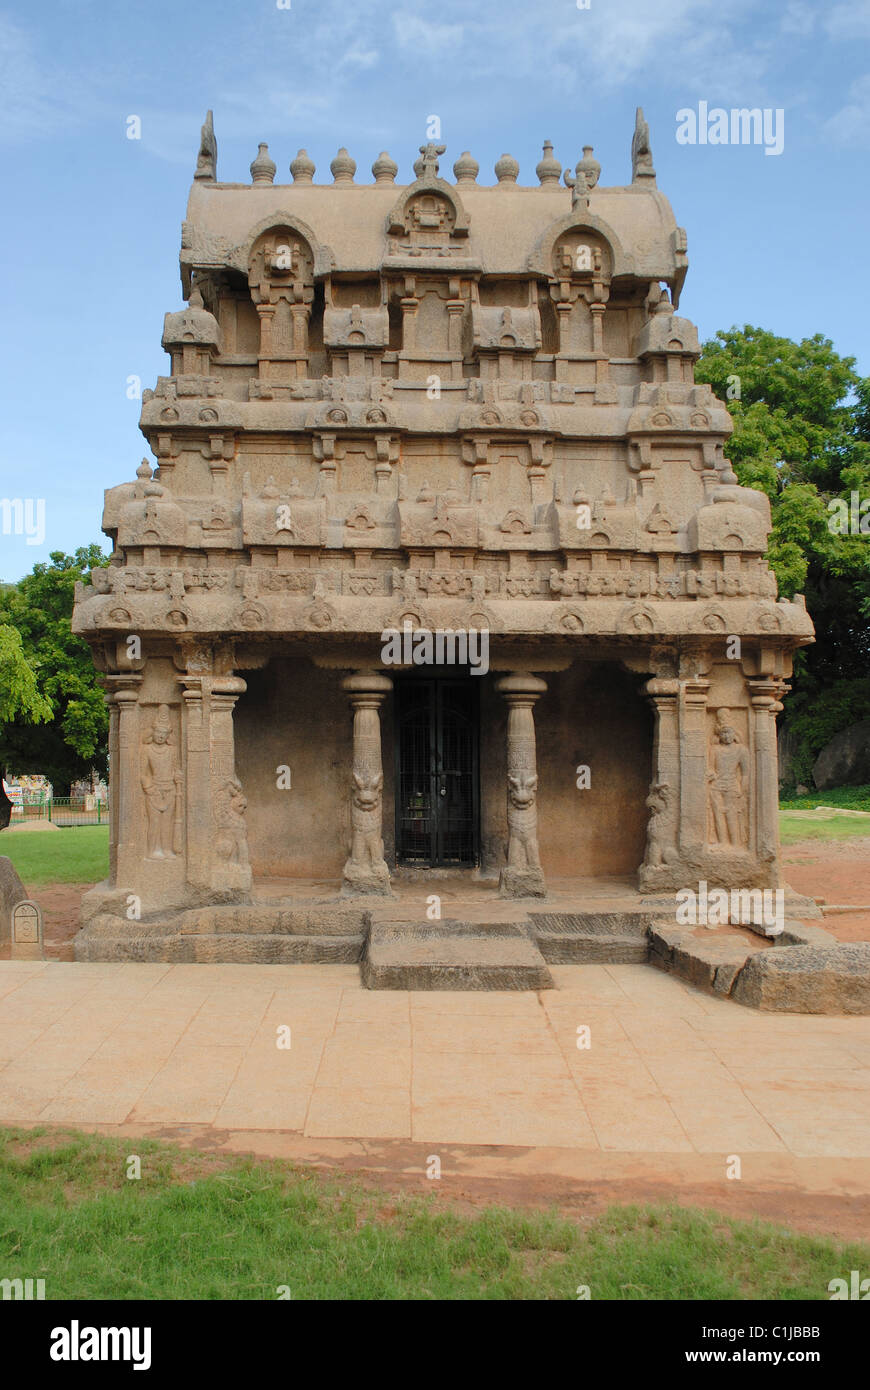 Façade of a Monolithic temple in the vicinity of Mahabalipuram, Tamil Nadu, India. Circa 7th. Century CE. Stock Photo